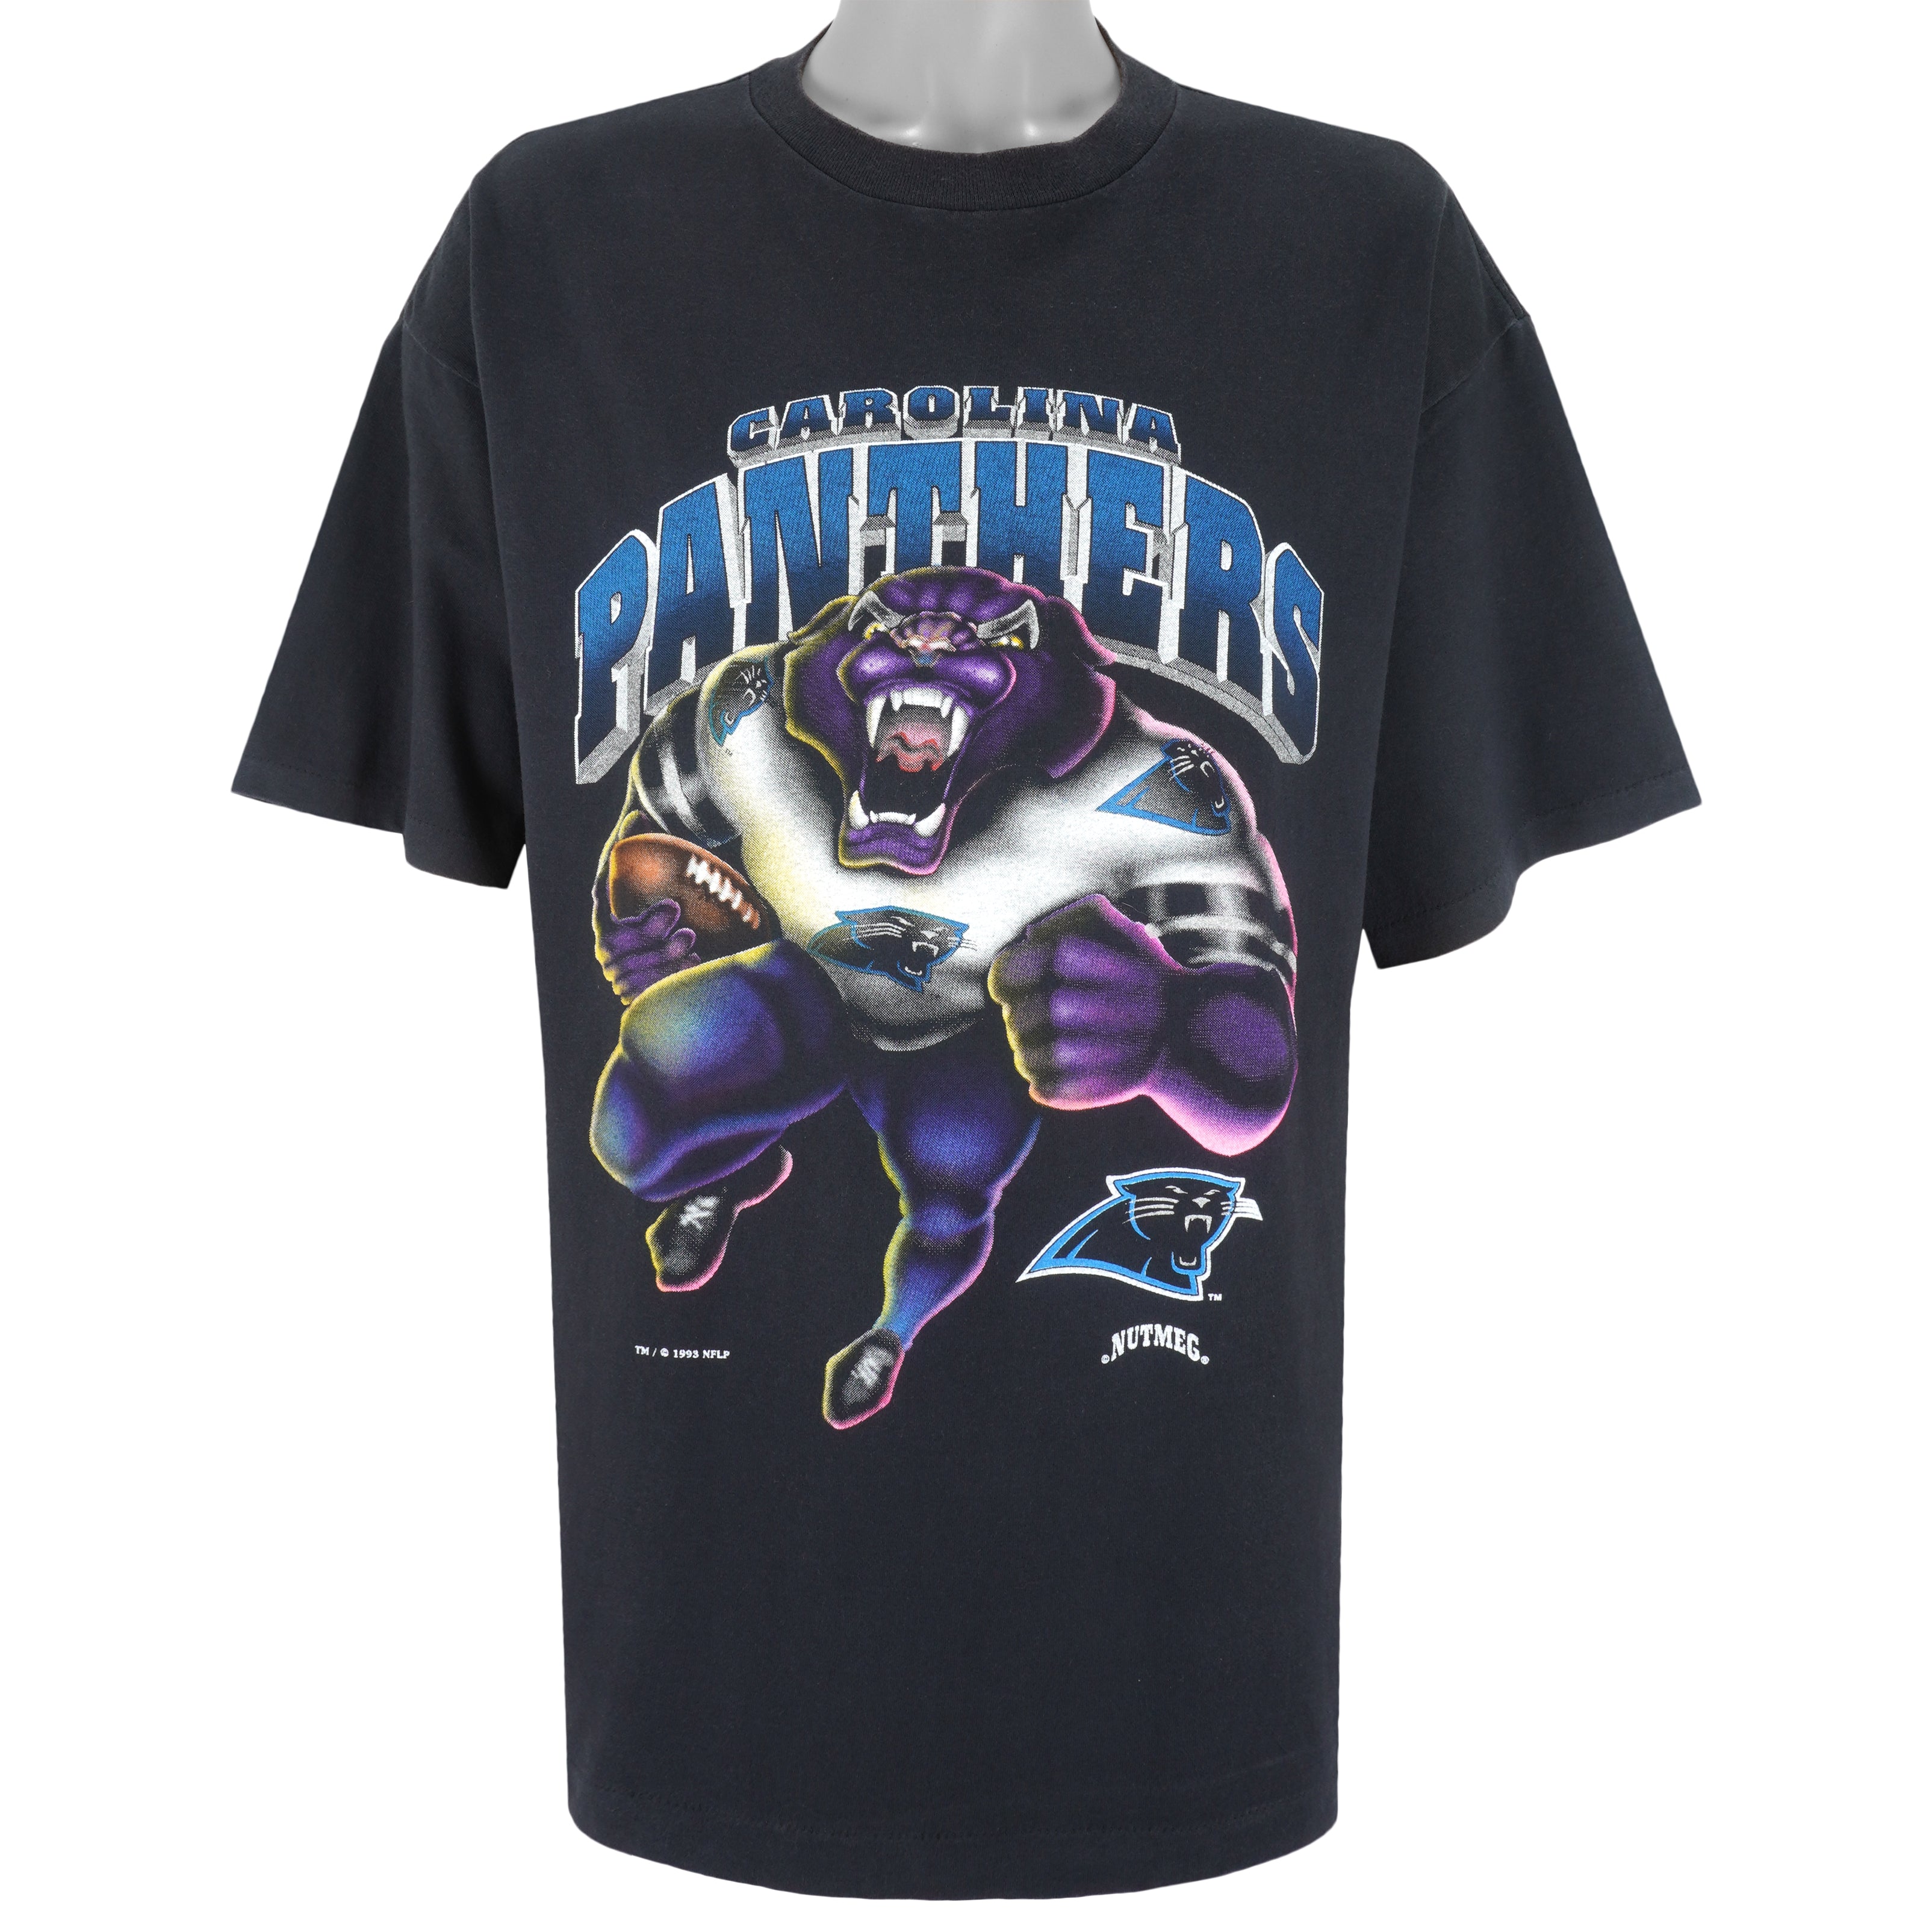 Vintage 1993 Carolina Panthers T-Shirt by Nutmeg